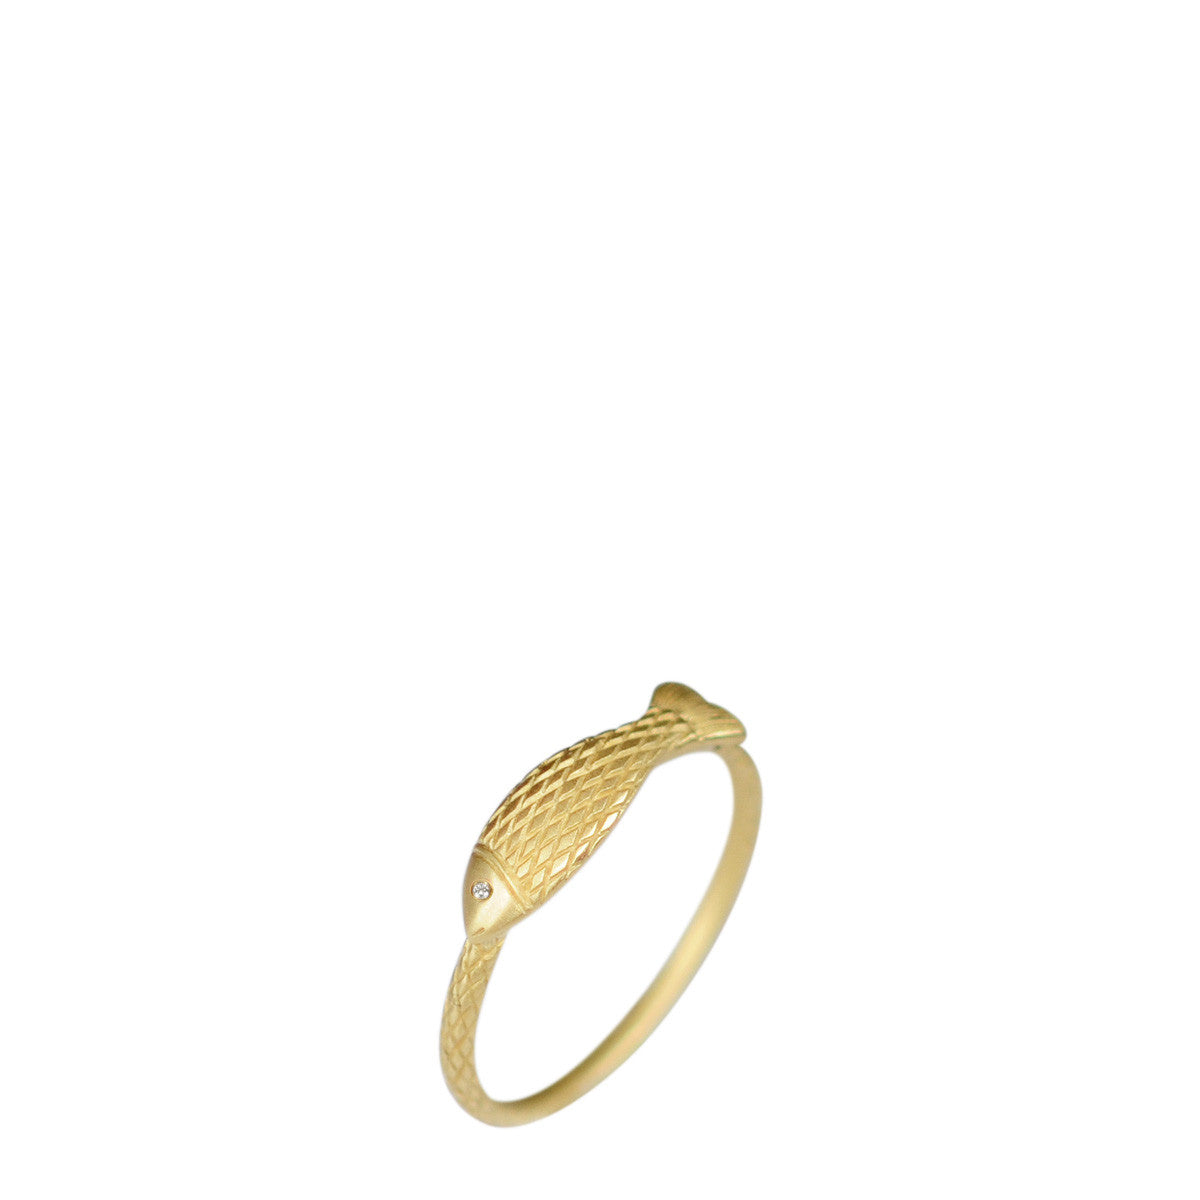 18K Gold Fish Ring with Diamond Eye